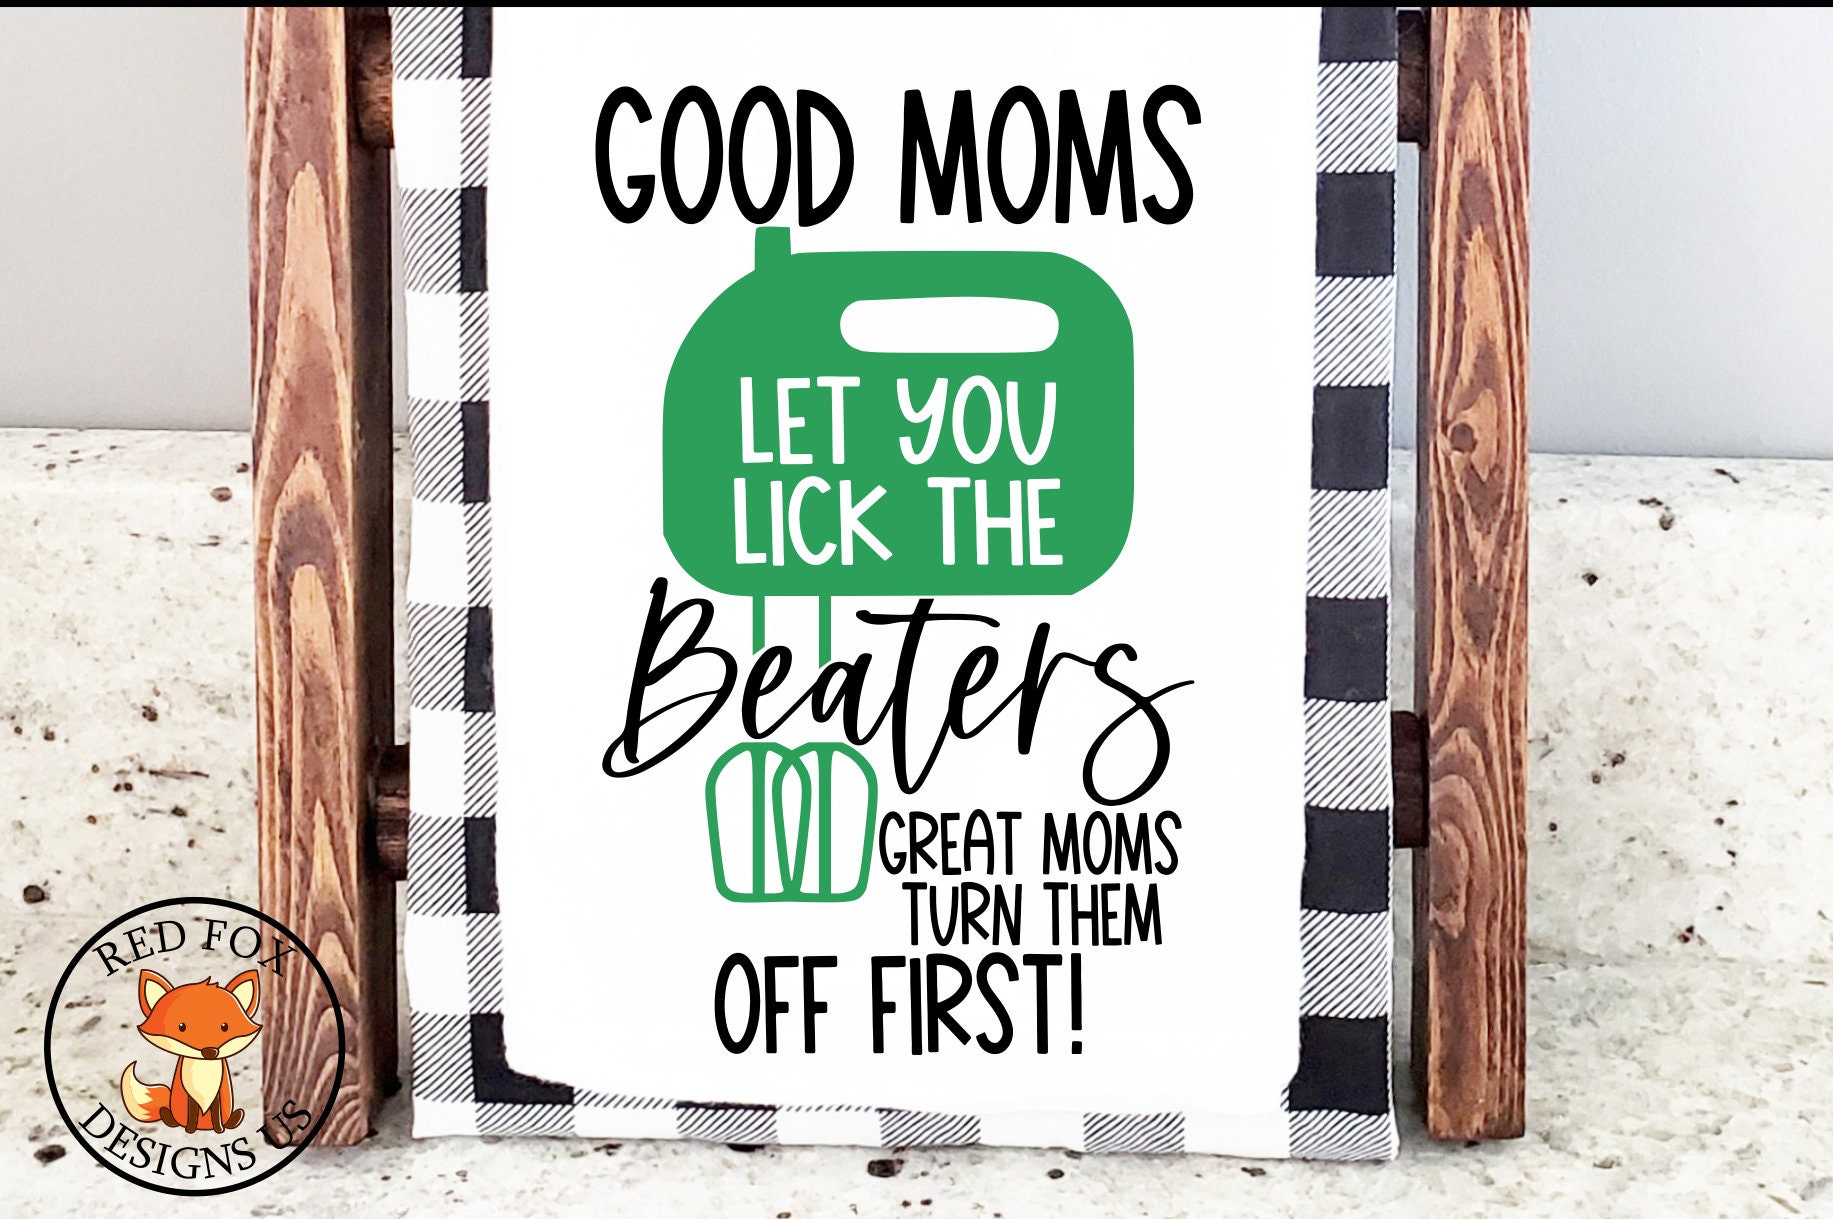 Good Moms Let You Lick the Beaters - Tea Towel - Lone Star Art